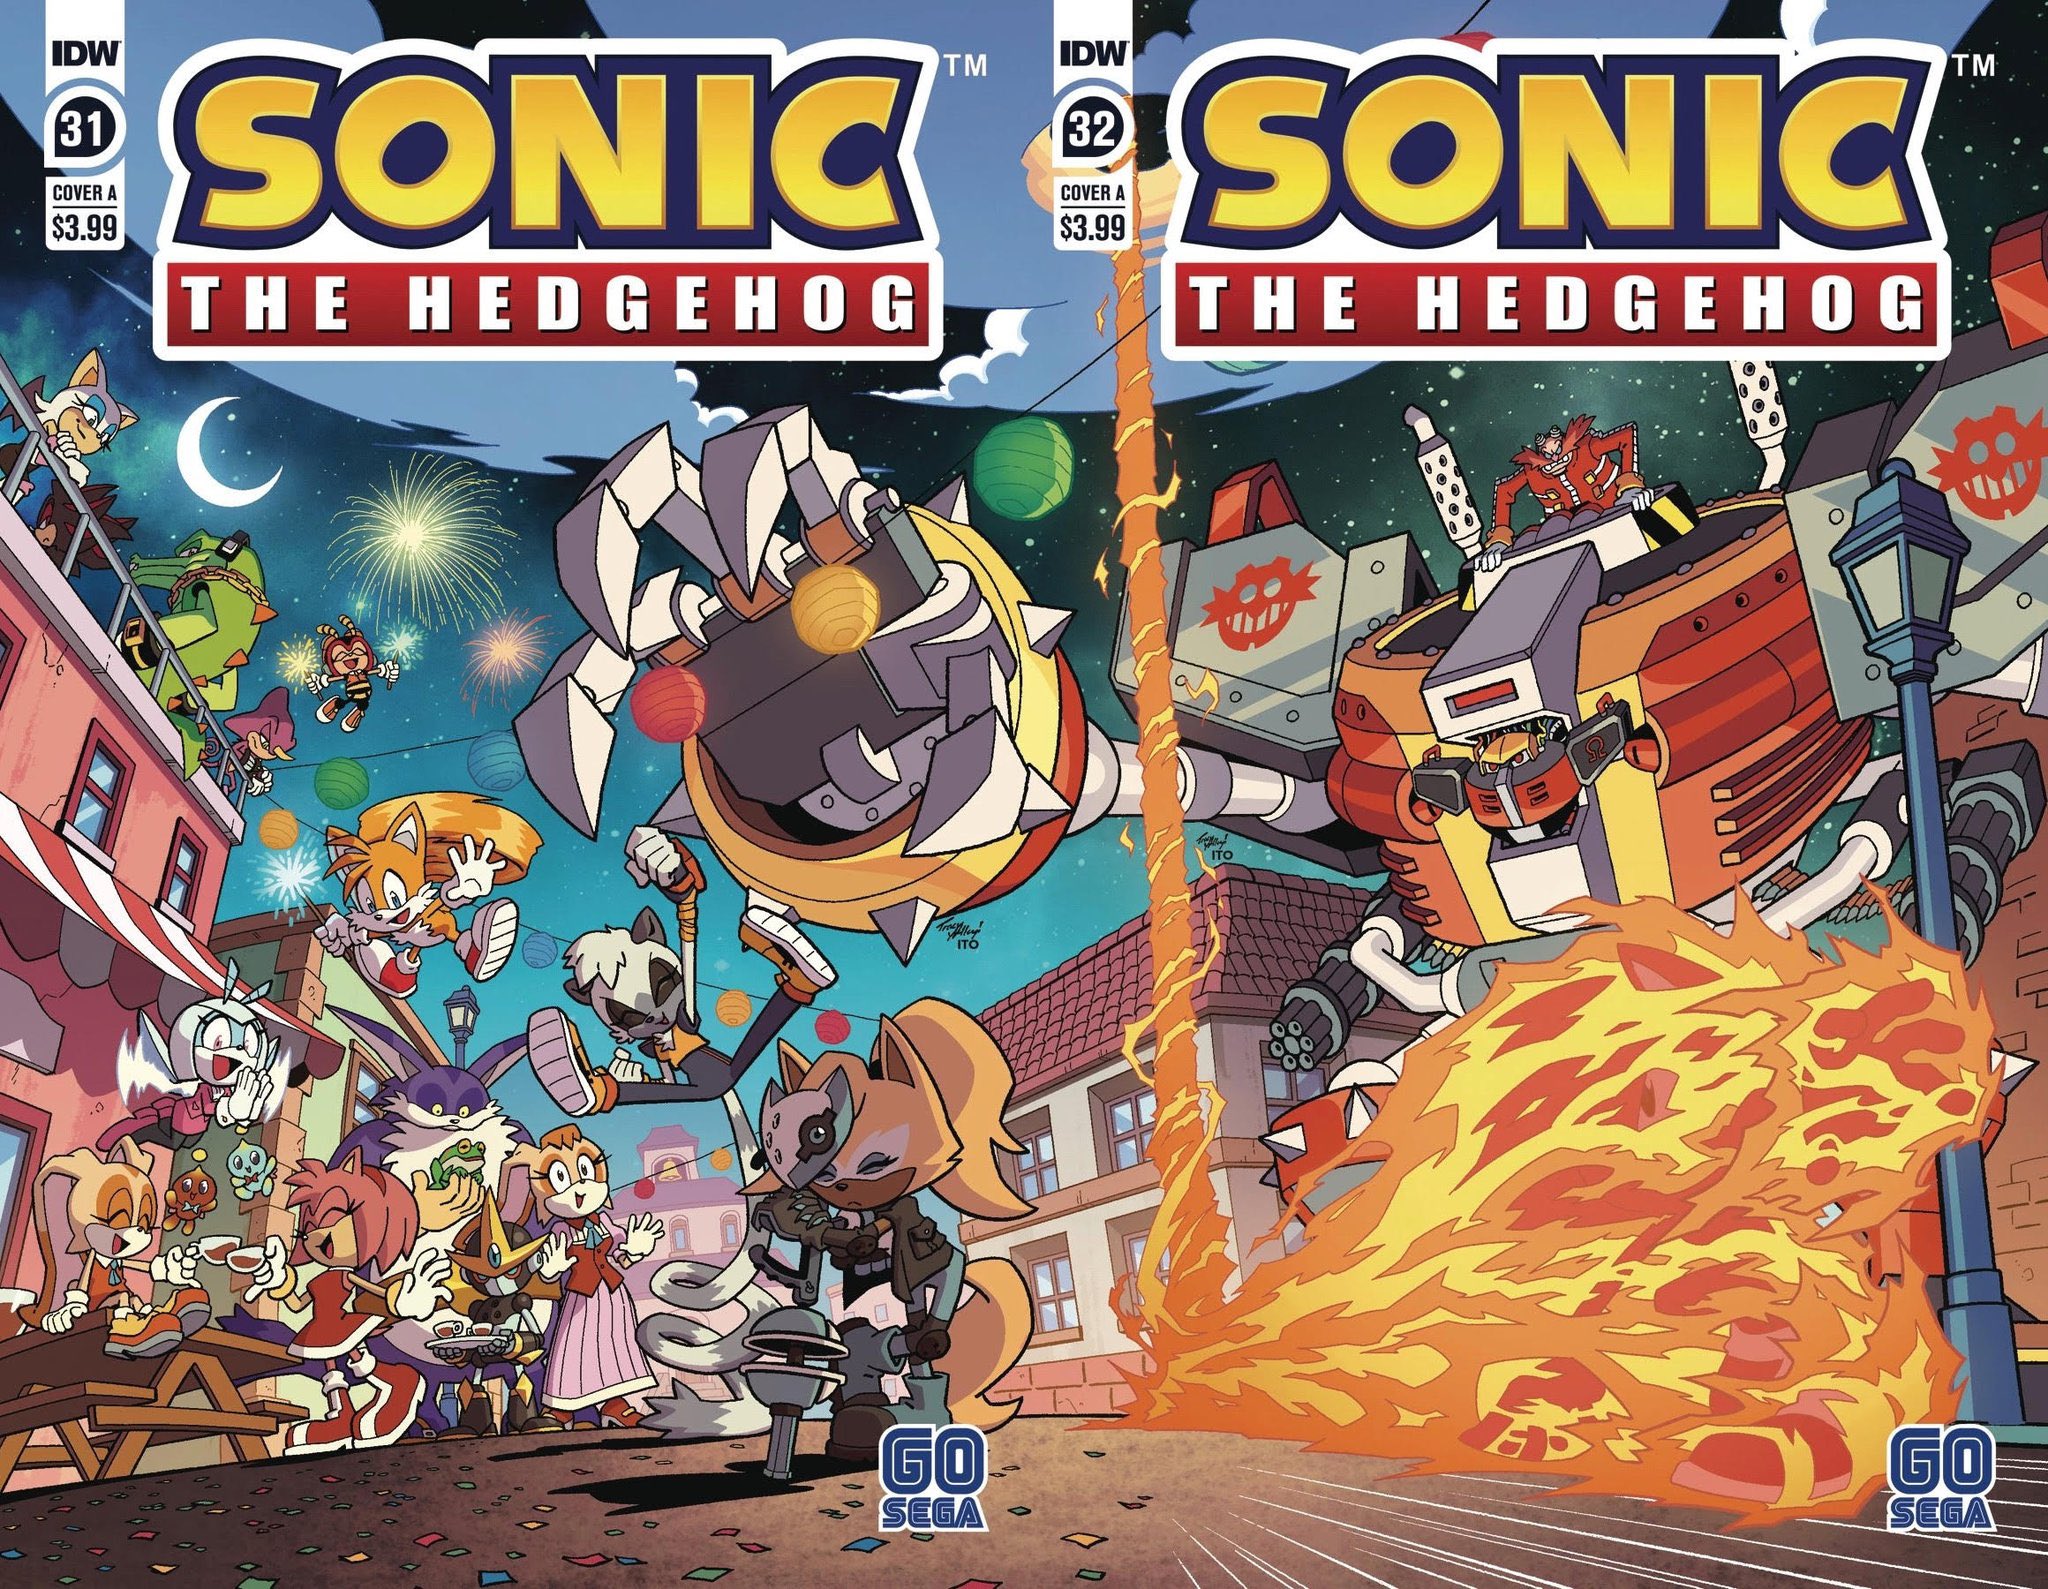 Comics Sonic the Hedgehog (IDW) HD Wallpaper by yardleyart